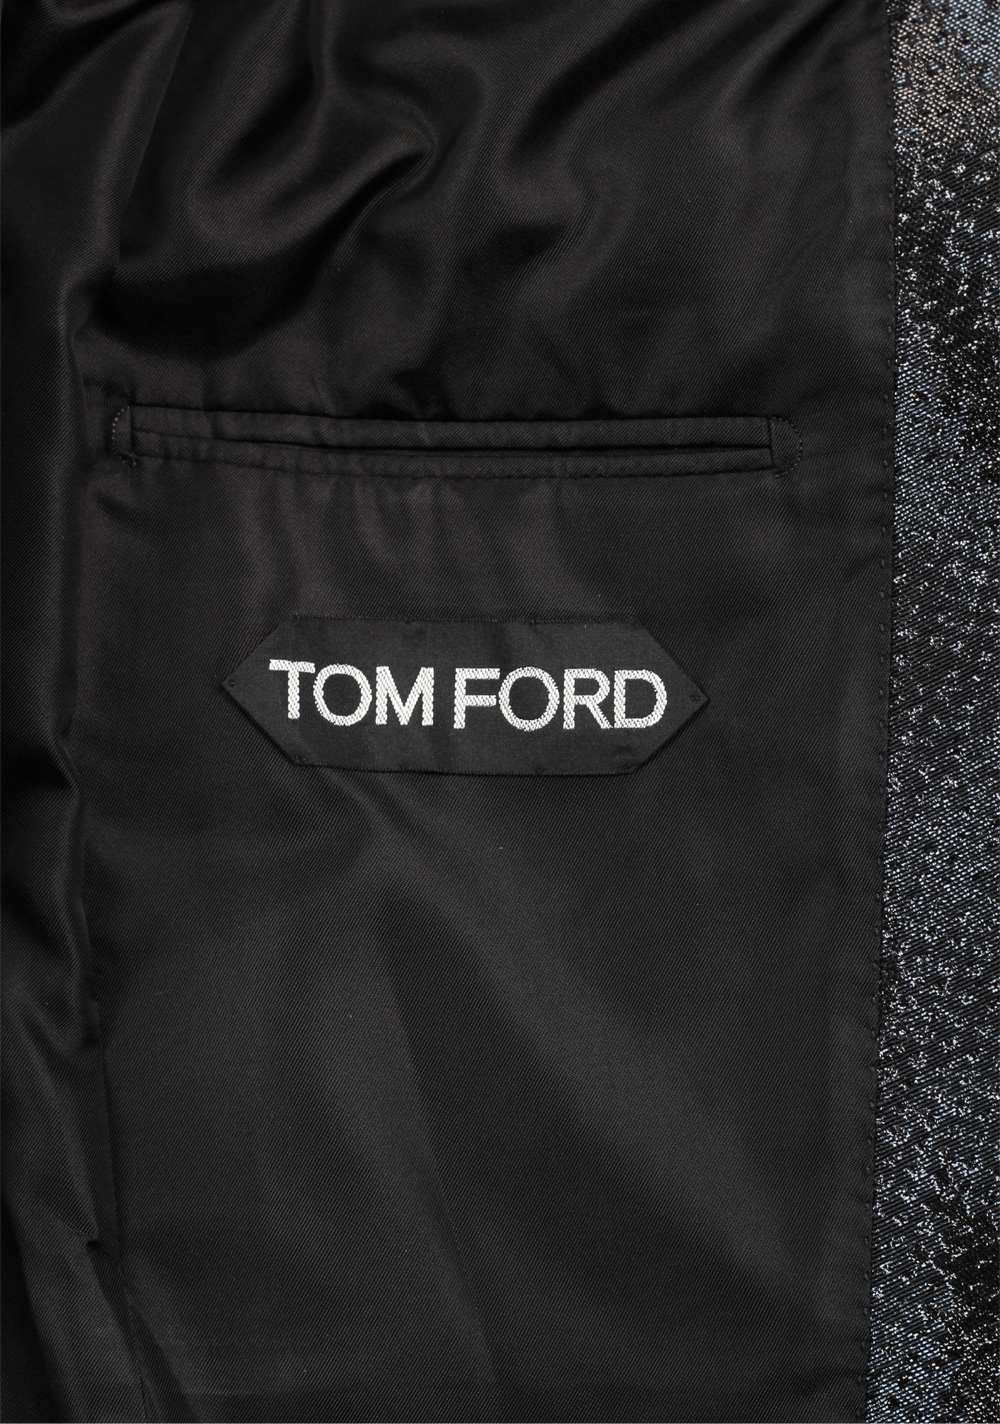 TOM FORD Atticus Black Tuxedo Dinner Jacket Size 46 / 36R U.S ...